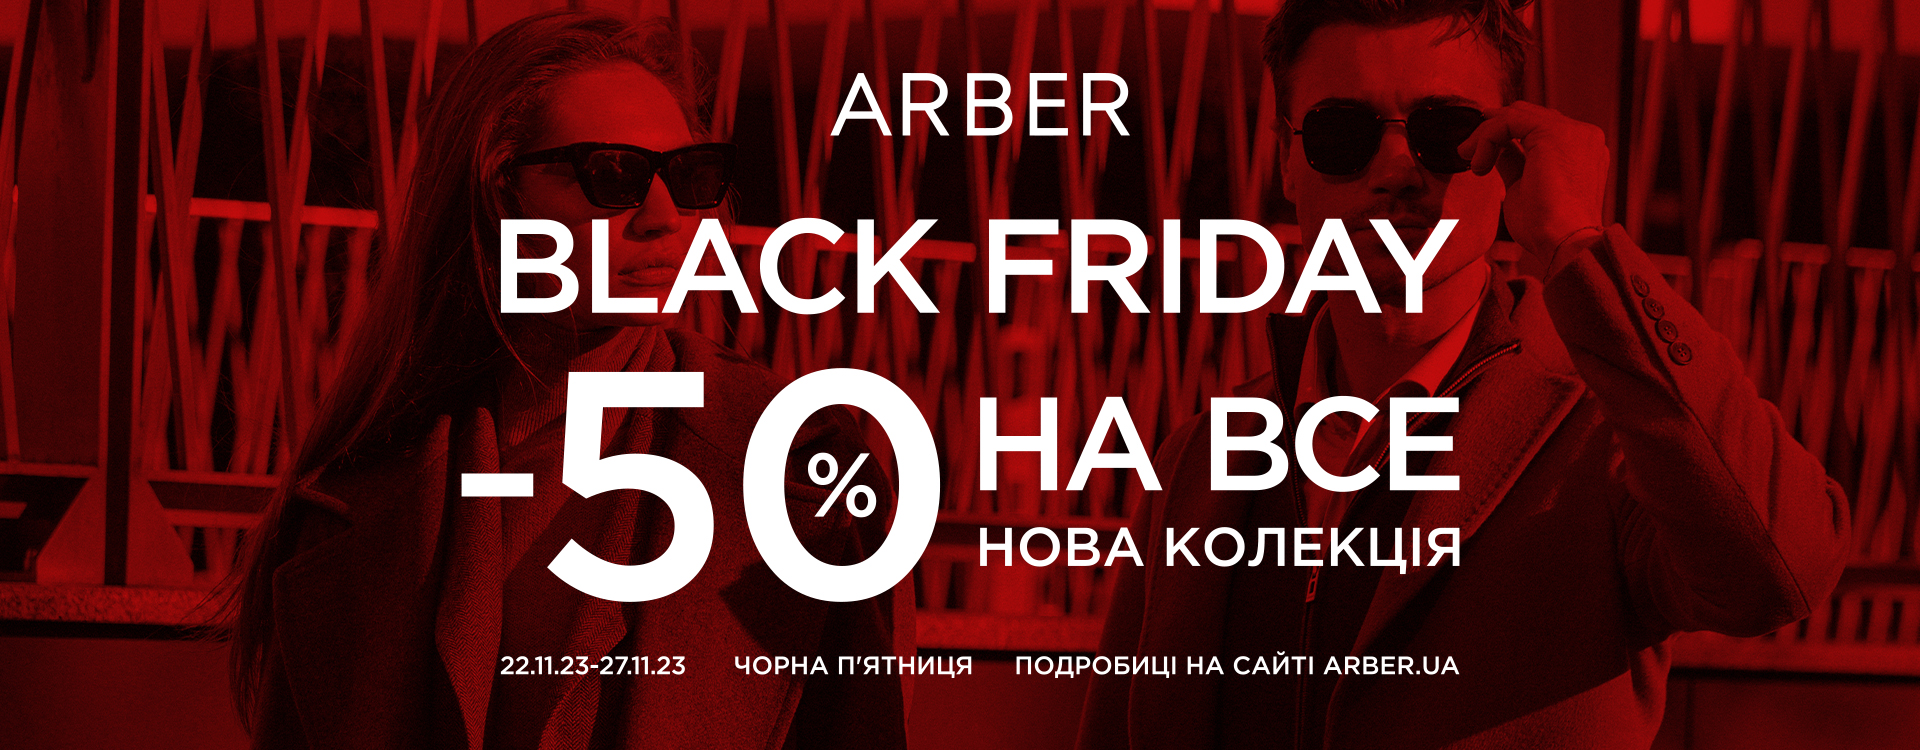 В ARBER Black Friday зі знижками -50%